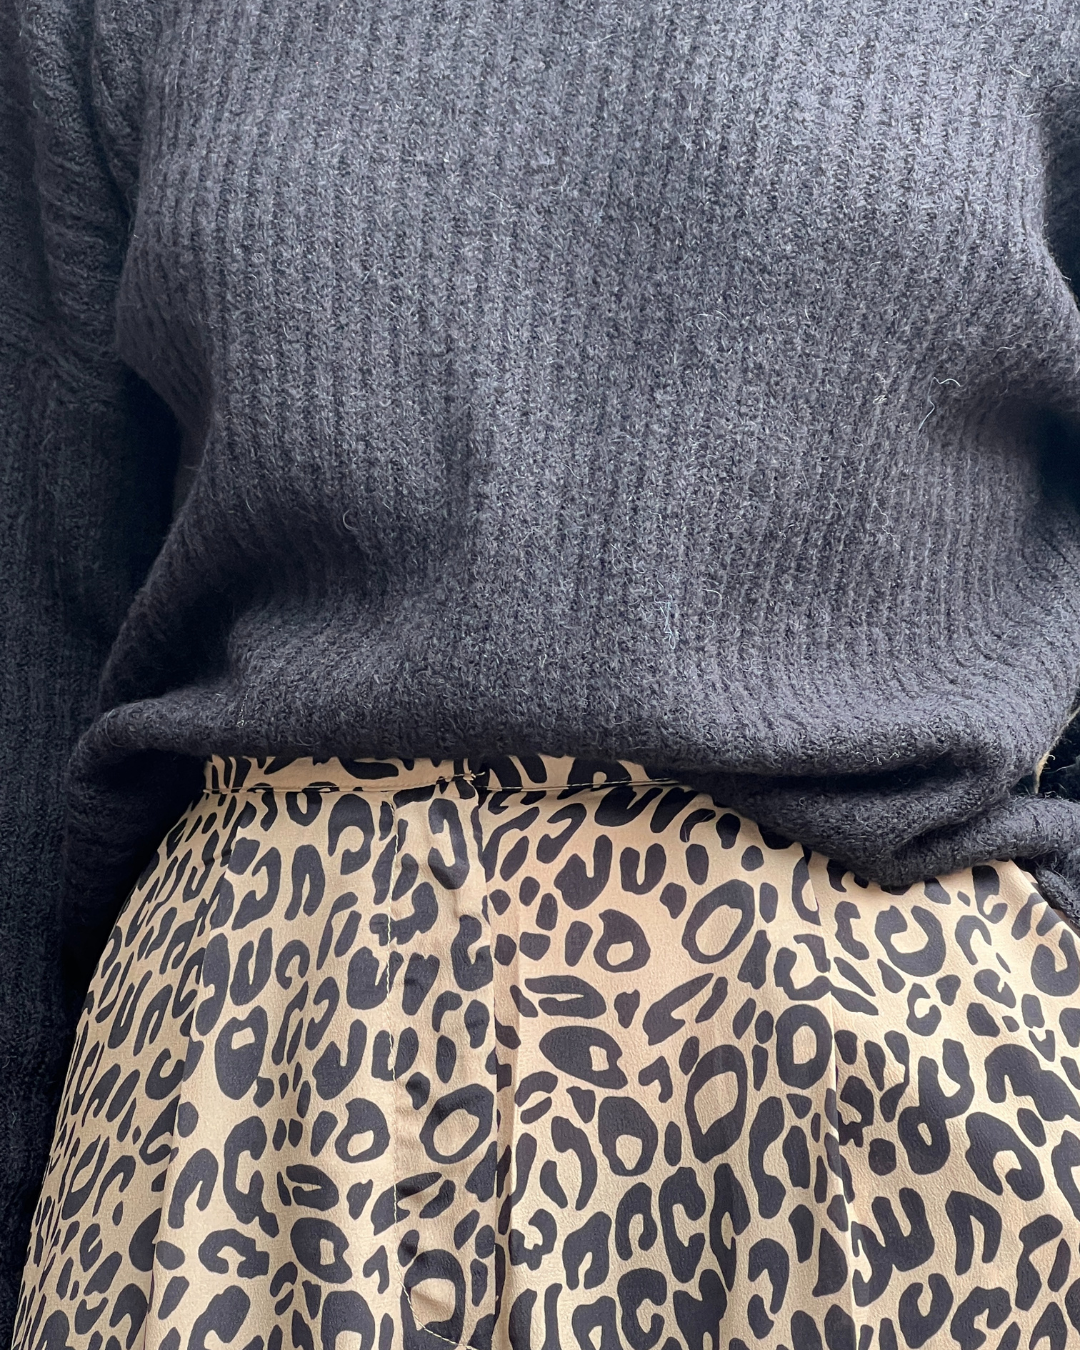 leopard print trousers 